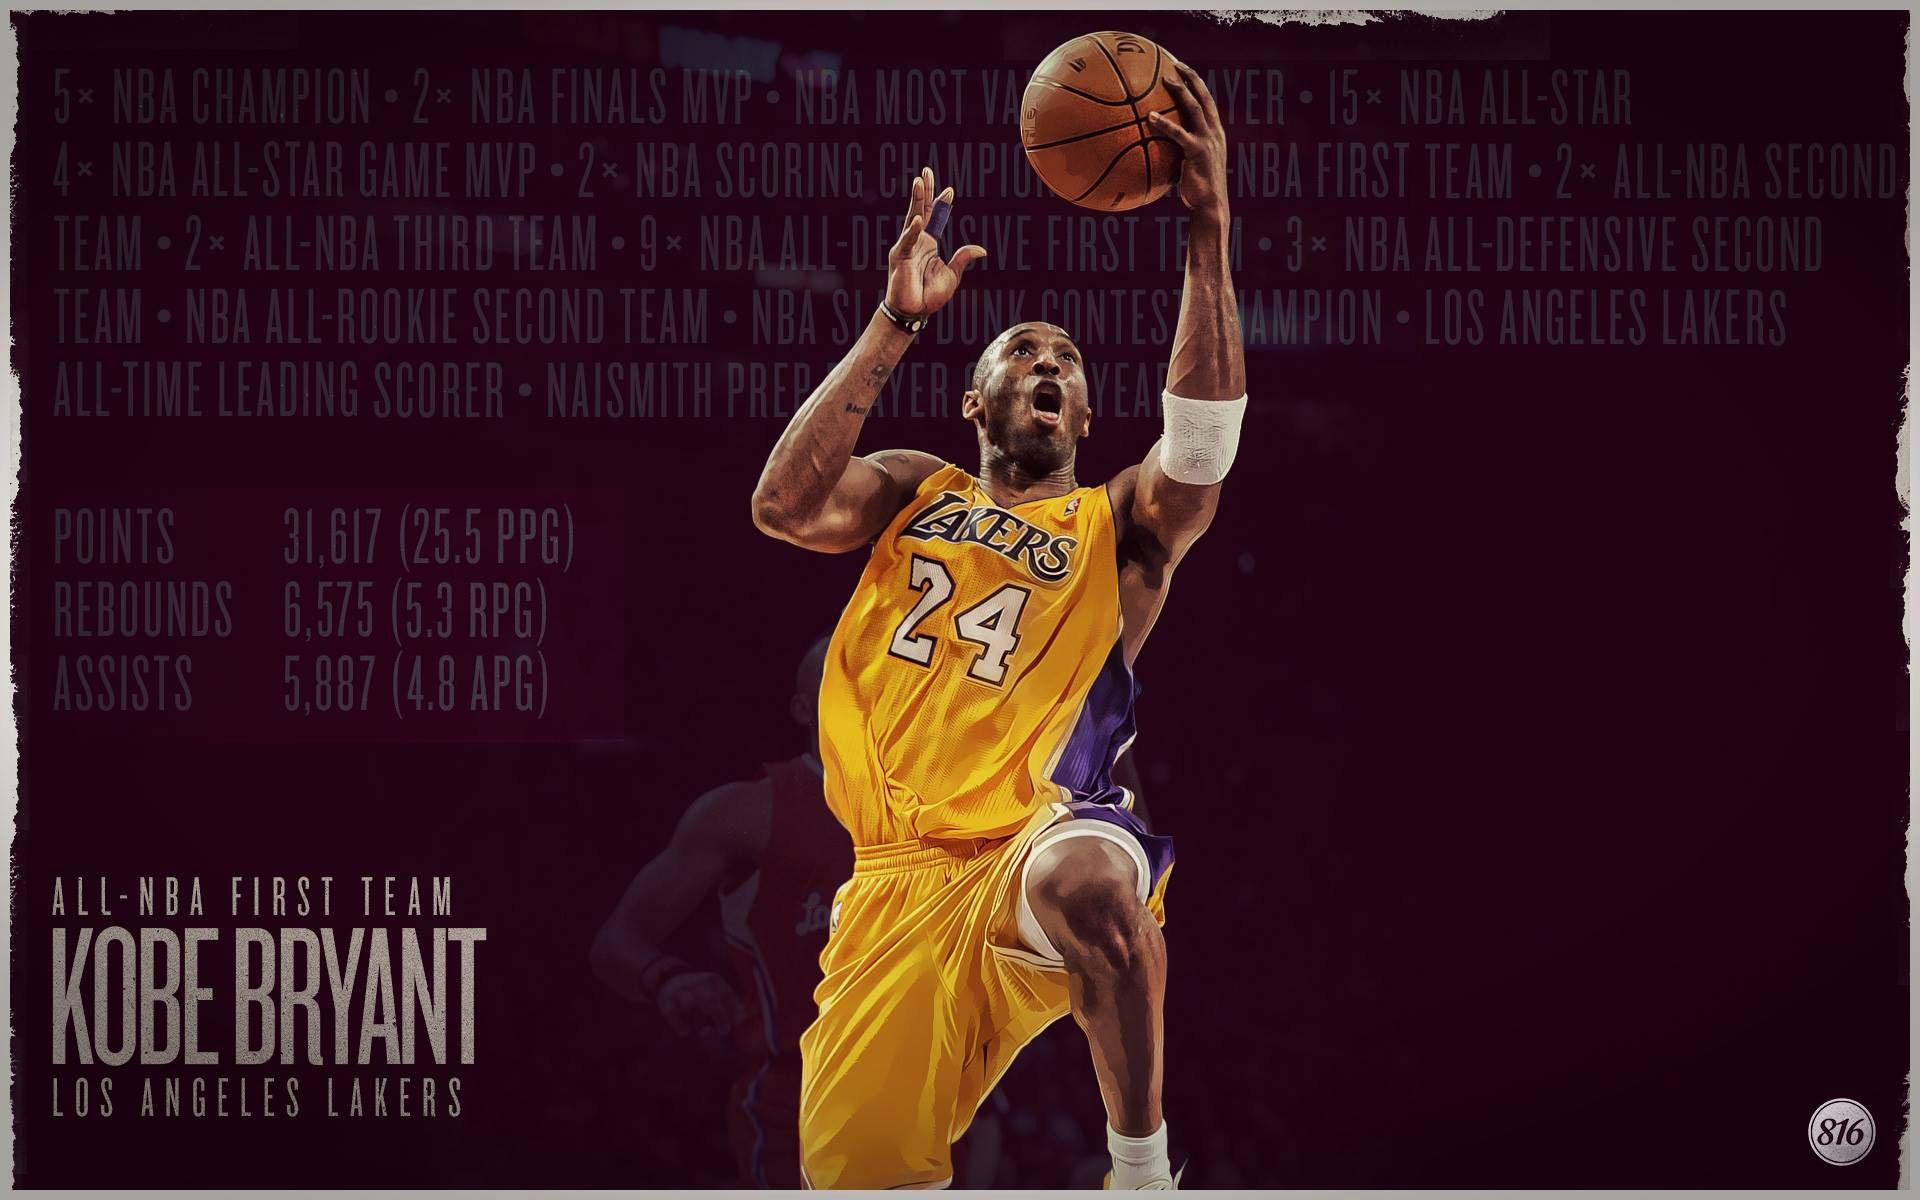 Kobe Bryant 2013 All NBA First Team 1920×1200 Wallpaper. Basketball